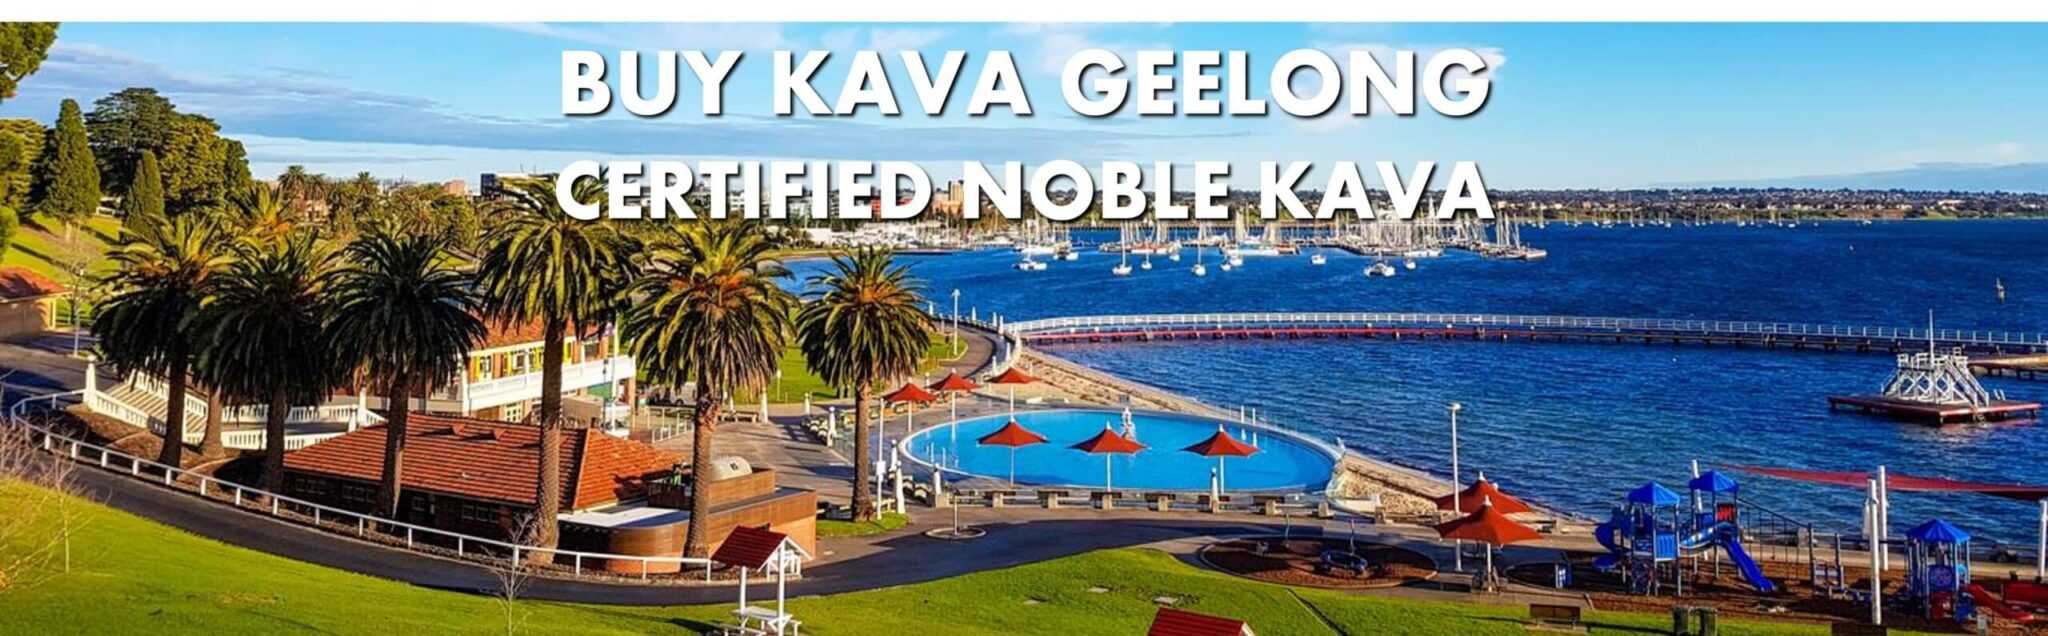 Seaside boardwalk in Geelong Victoria with caption Buy Kava Geelong Certified Noble Kava